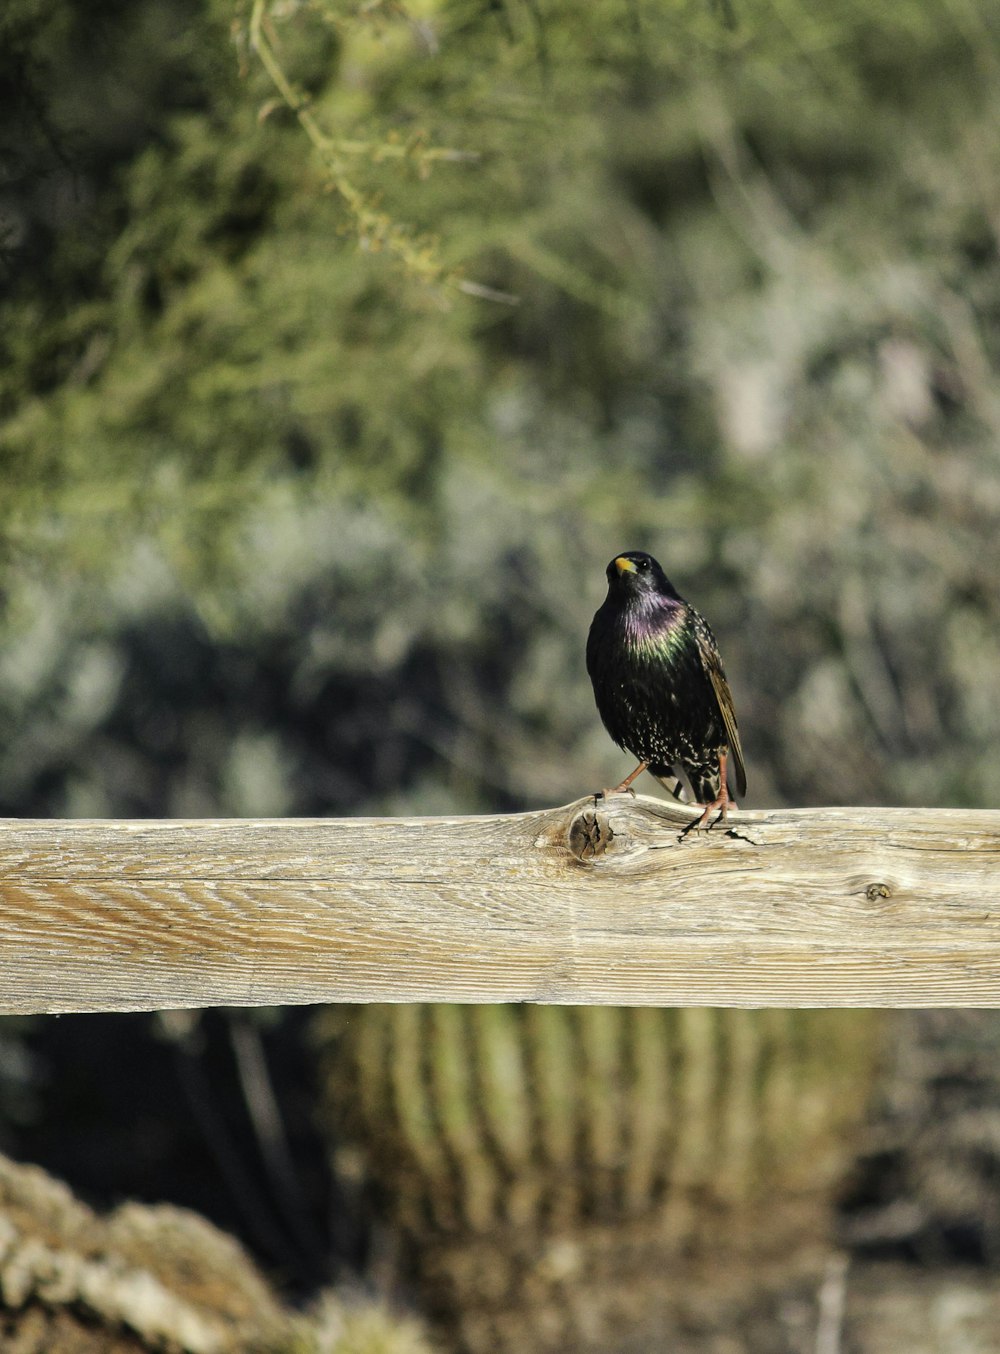 a black bird sitting on a wooden rail